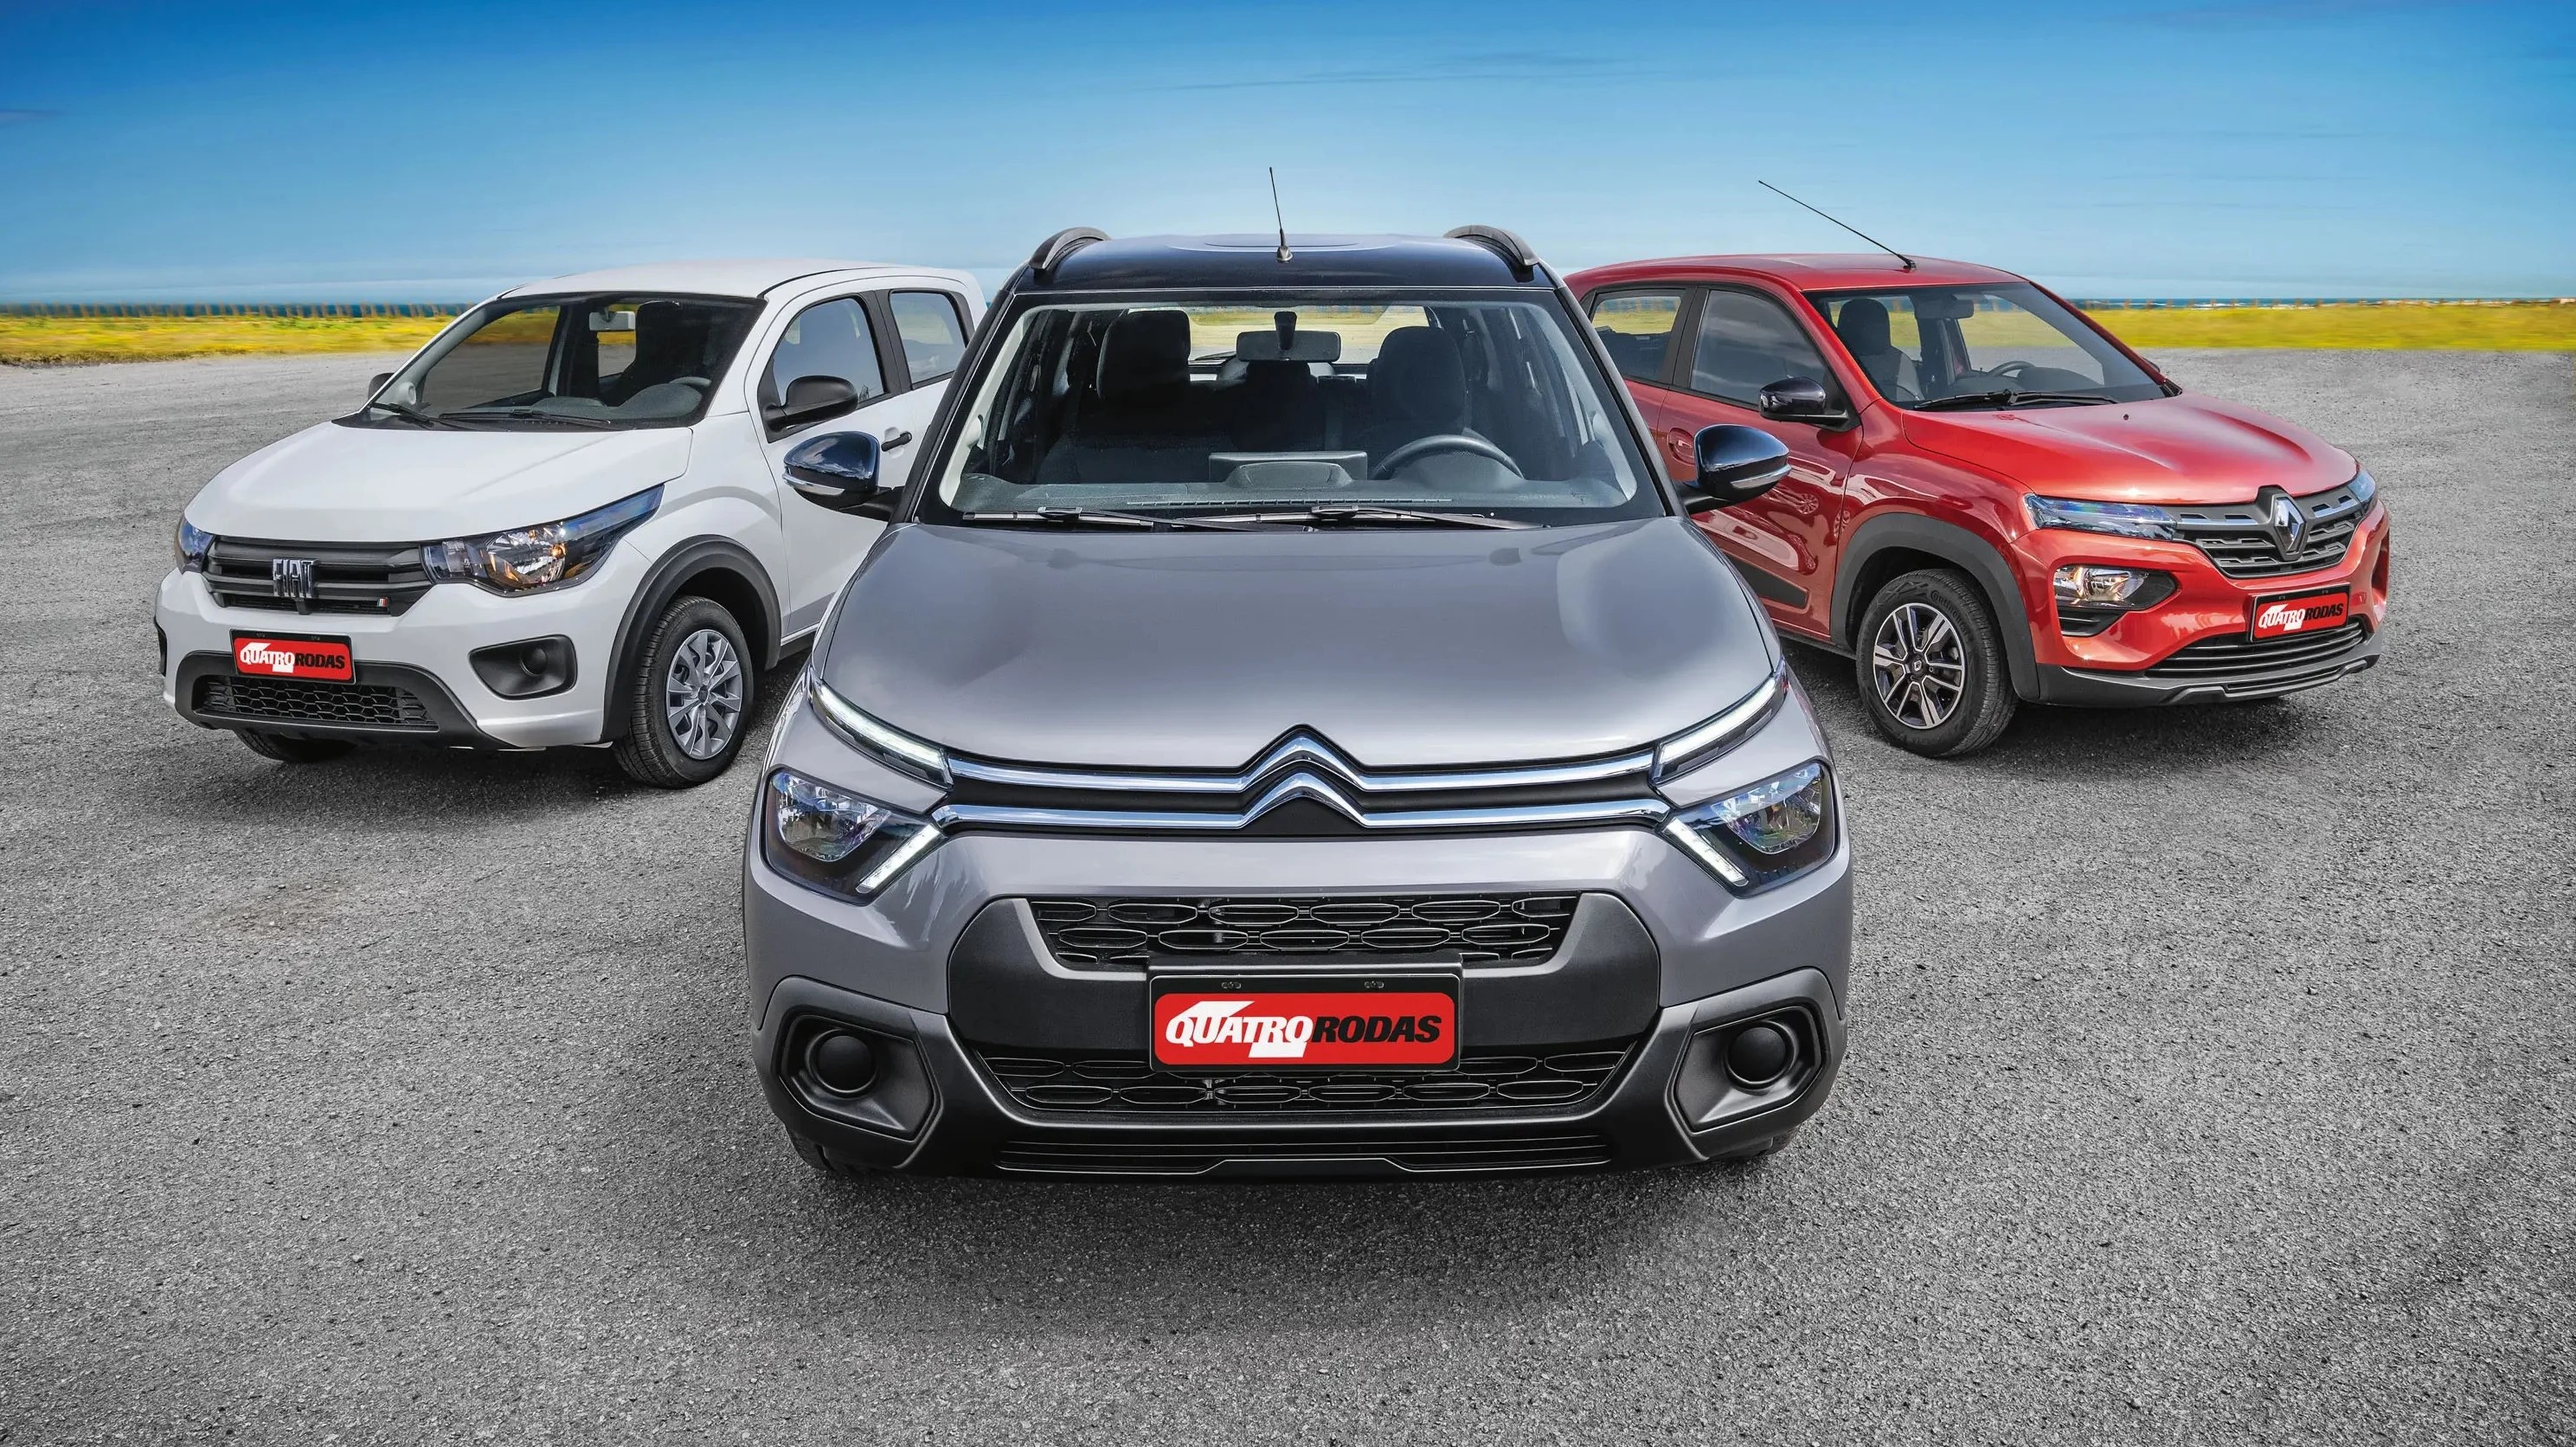 Comparativo: Novo Citroën C3 x Renault Kwid x Fiat Mobi